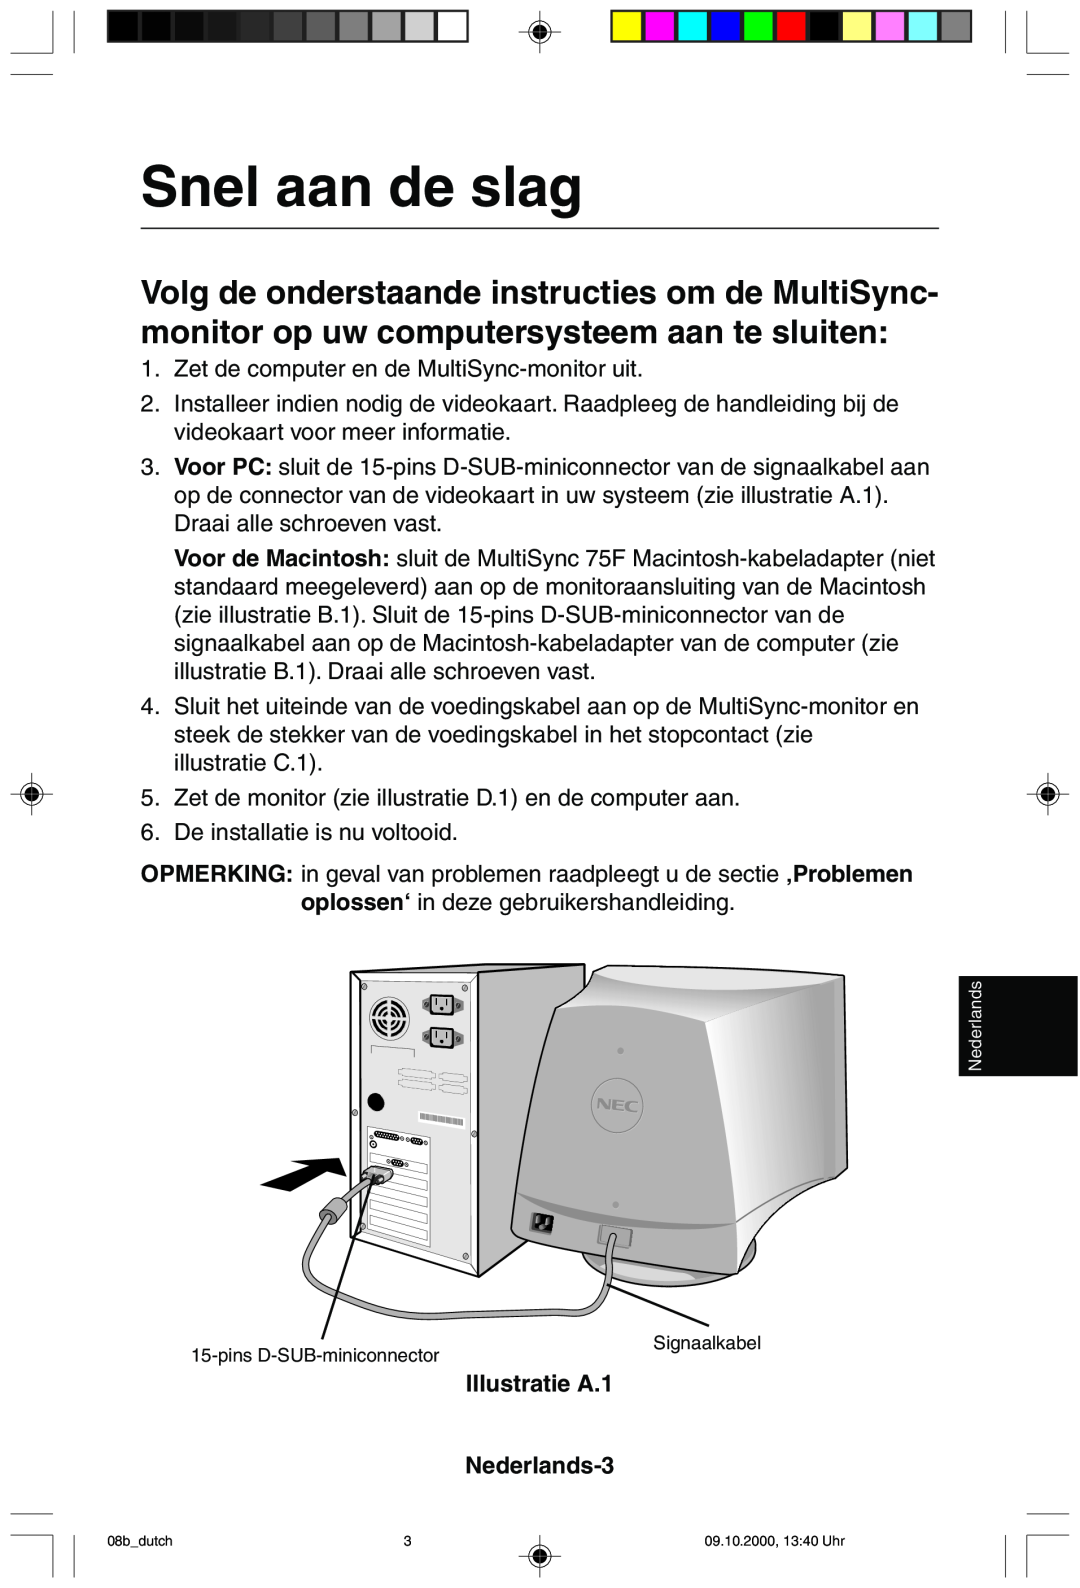 NEC 95F user manual Snel aan de slag, Illustratie A.1 Nederlands-3 